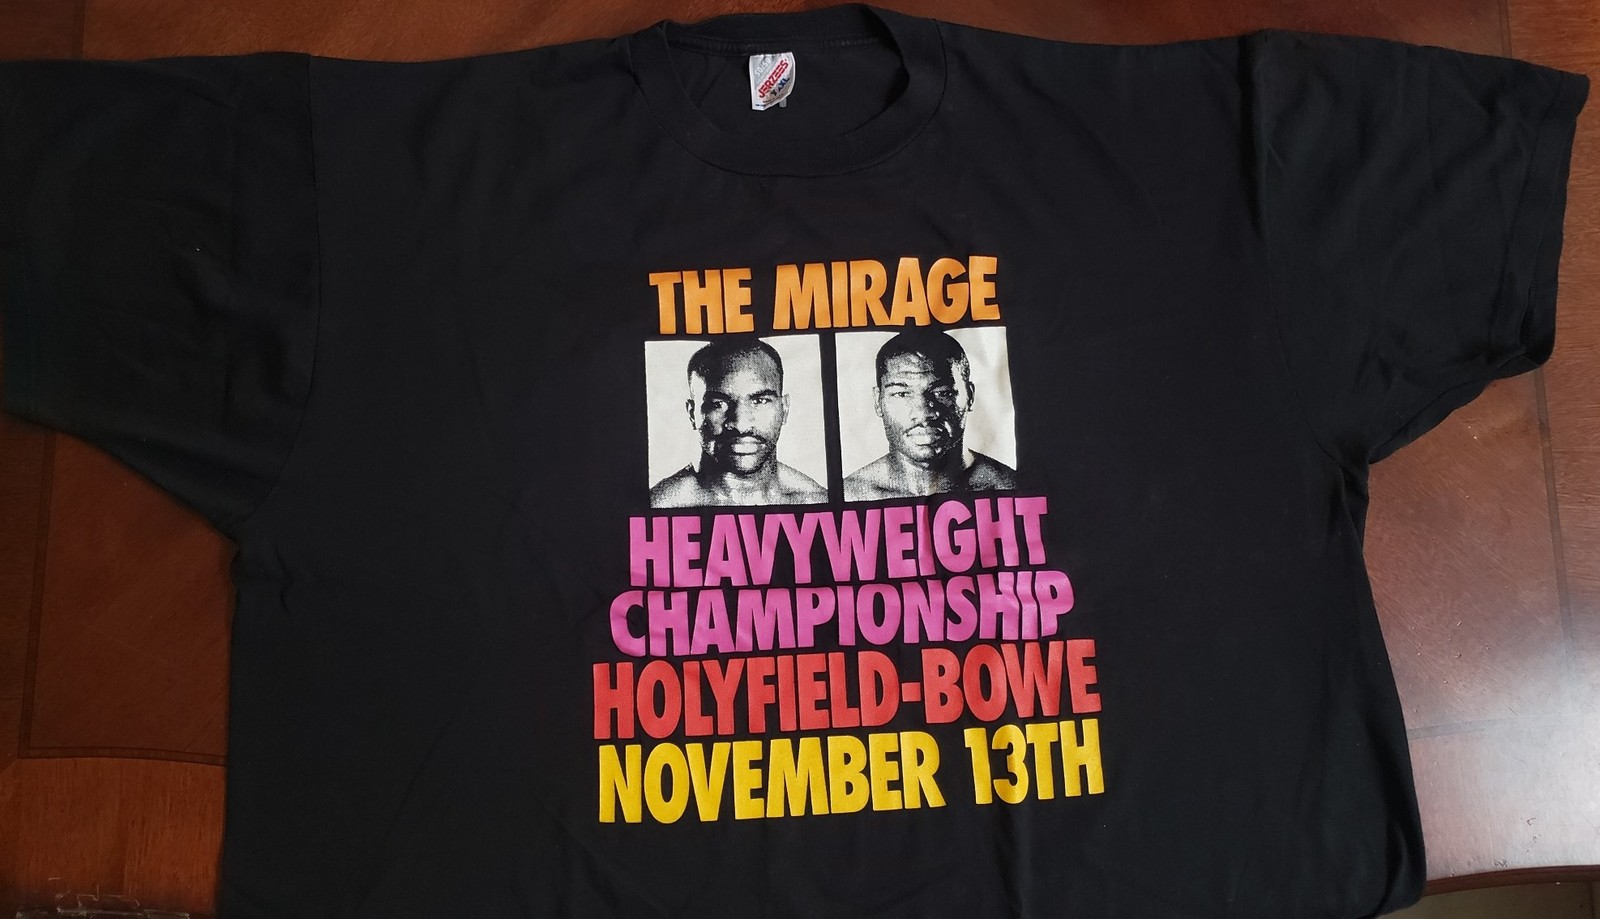 Holyfield-Bowe HW Chamionship Nov 13 Mirage Las Vegas Boxing t shirt, XXXL - $99.95